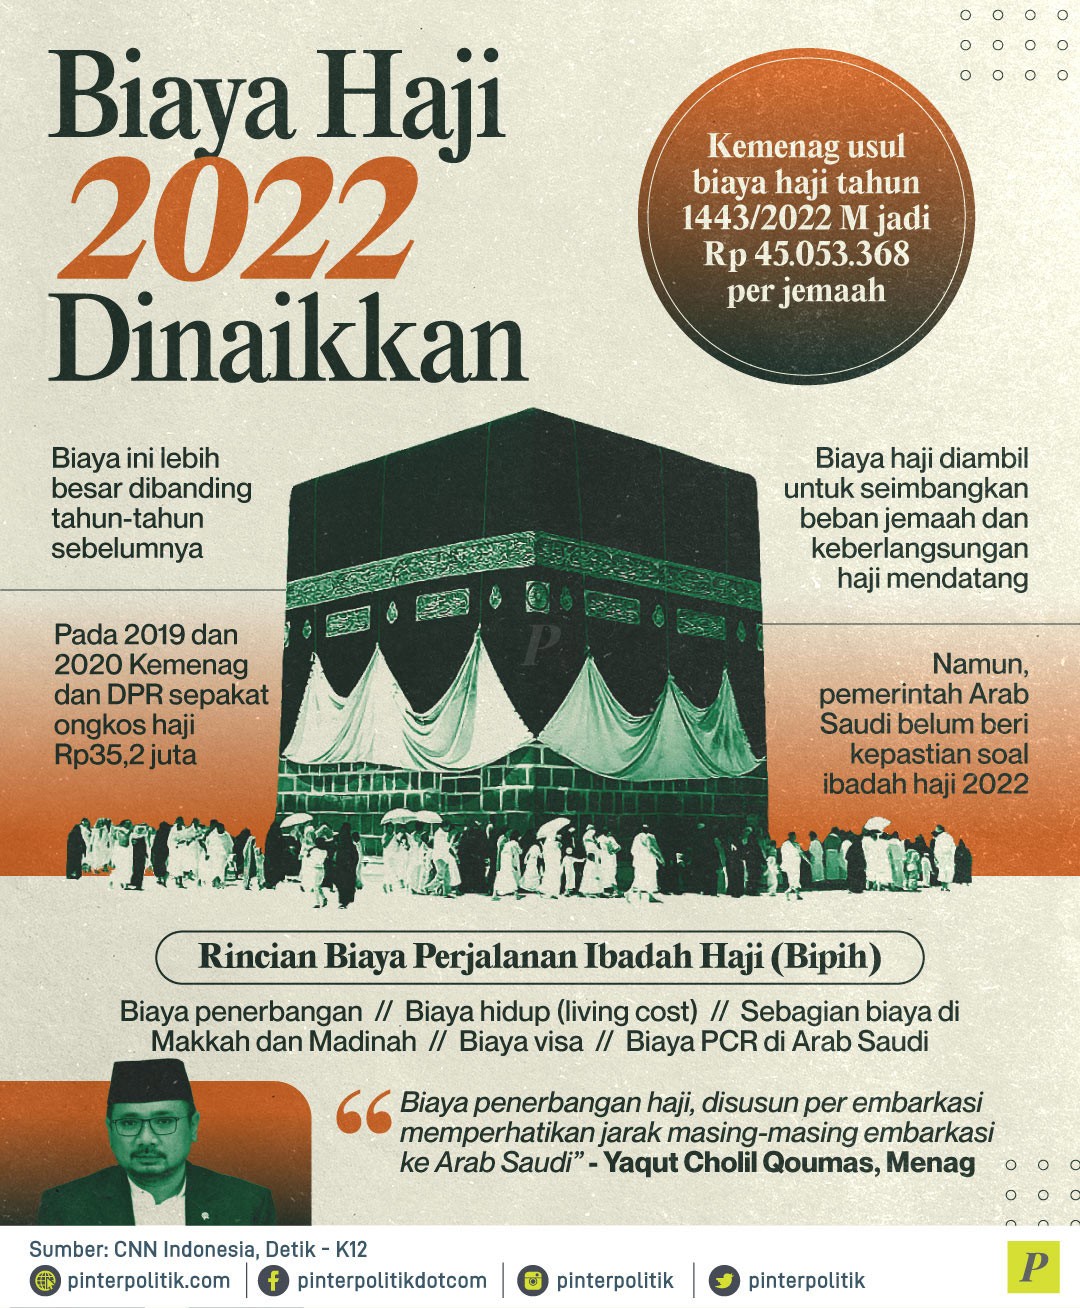 Biaya Haji 2022 Dinaikkan  PinterPolitik.com